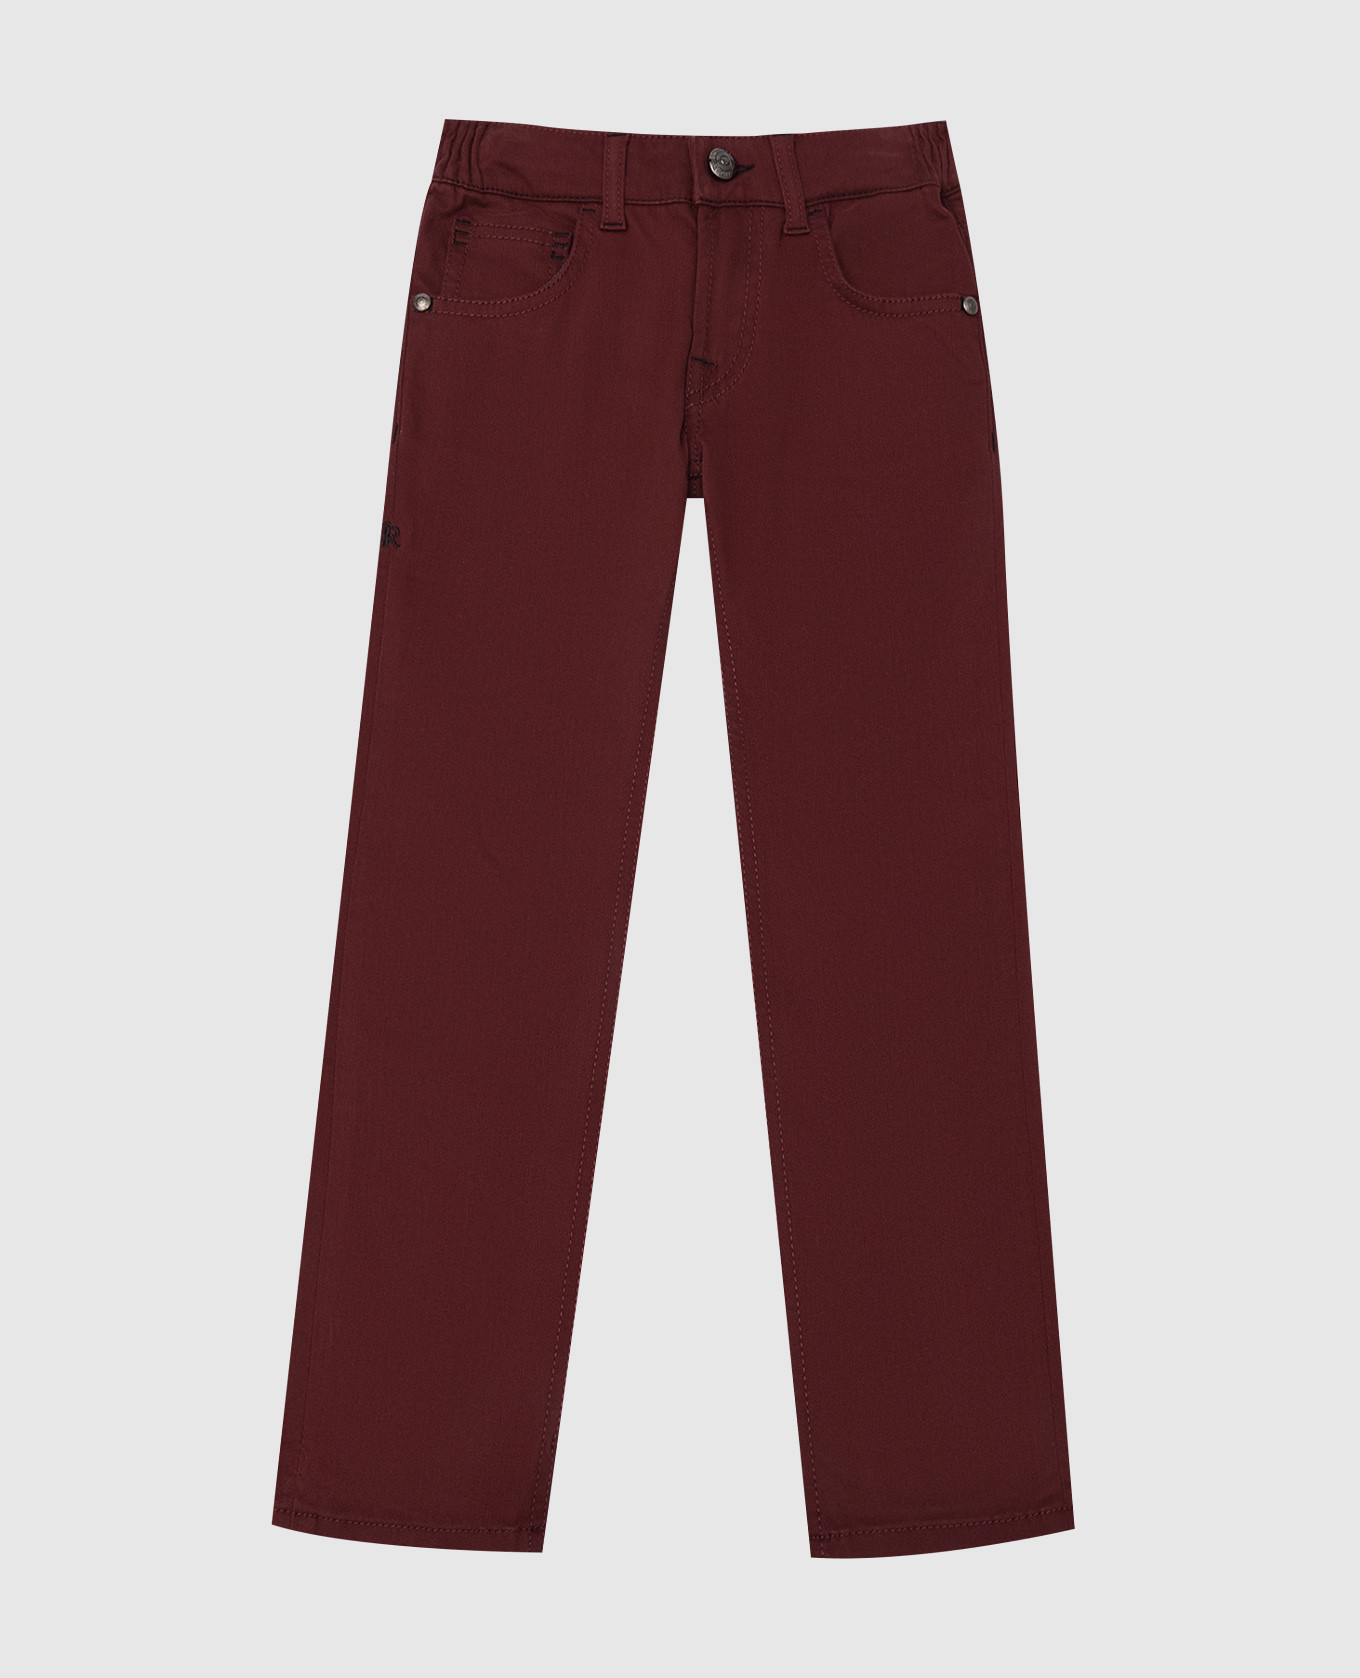 Children's burgundy pants